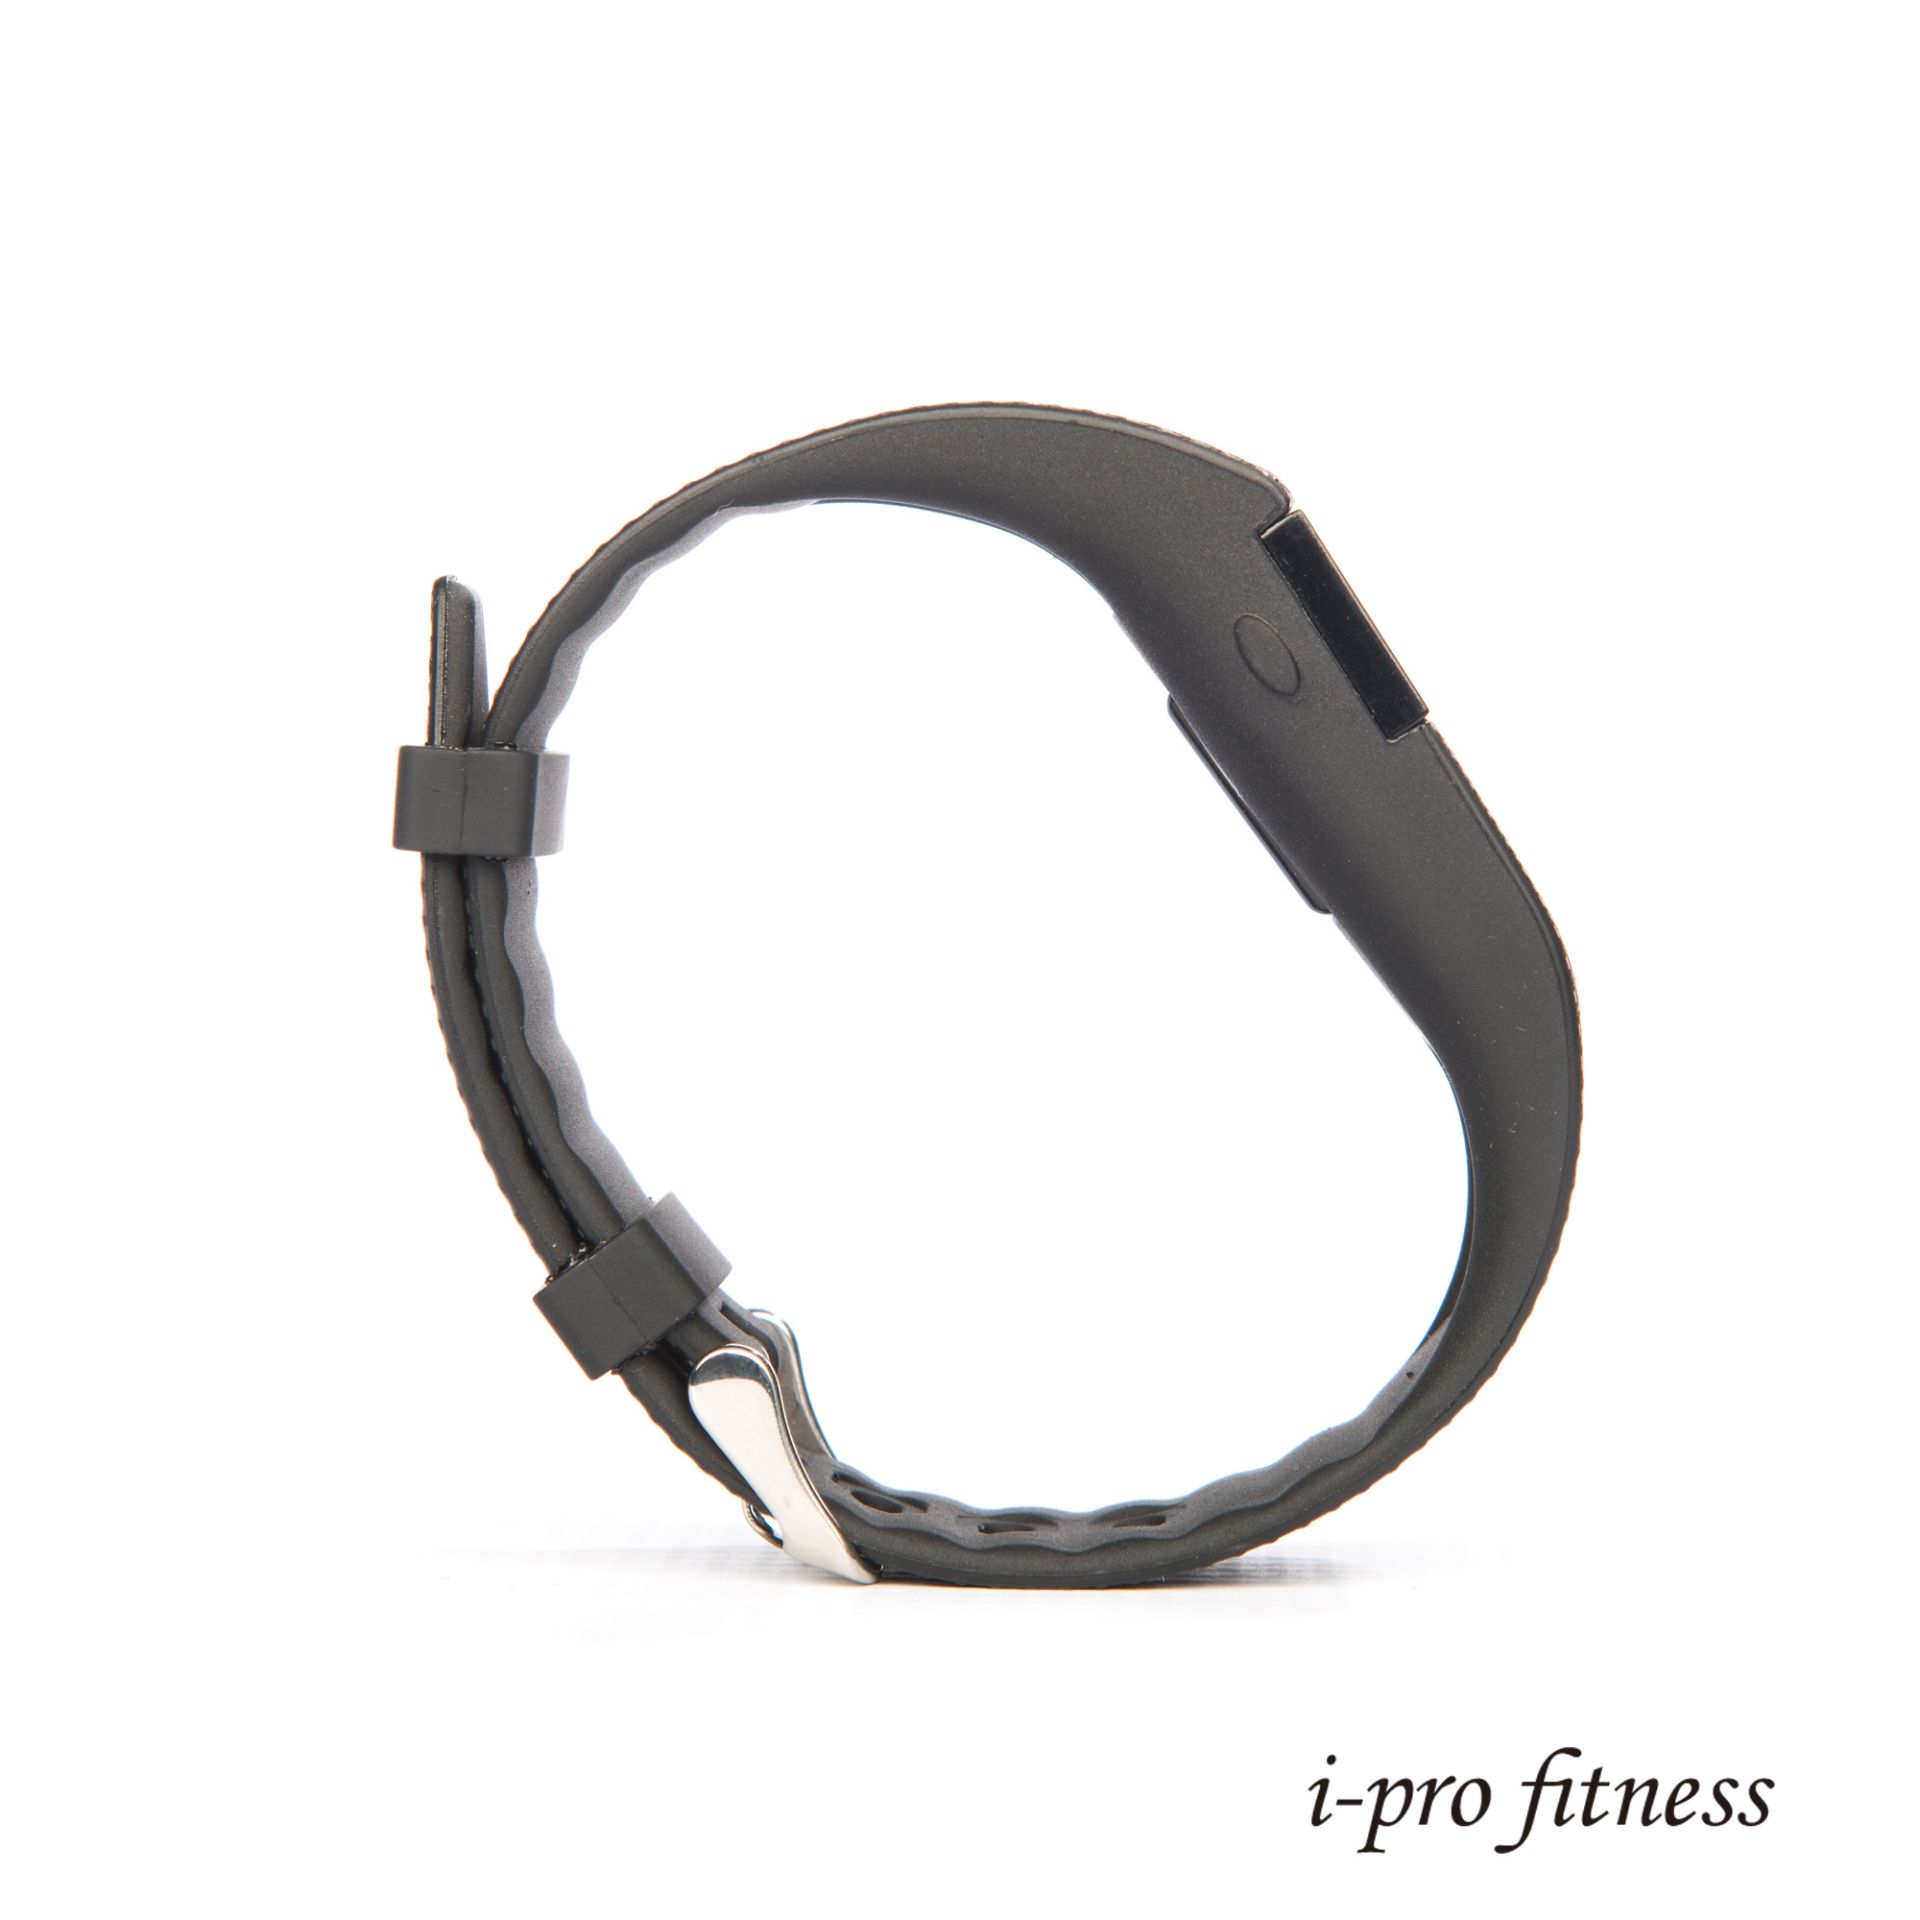 Fitness Tracker i-pro fitness, Bluetooth 4.0 Sports Smart Bracelet, Heart Rate Monitor - Image 5 of 8